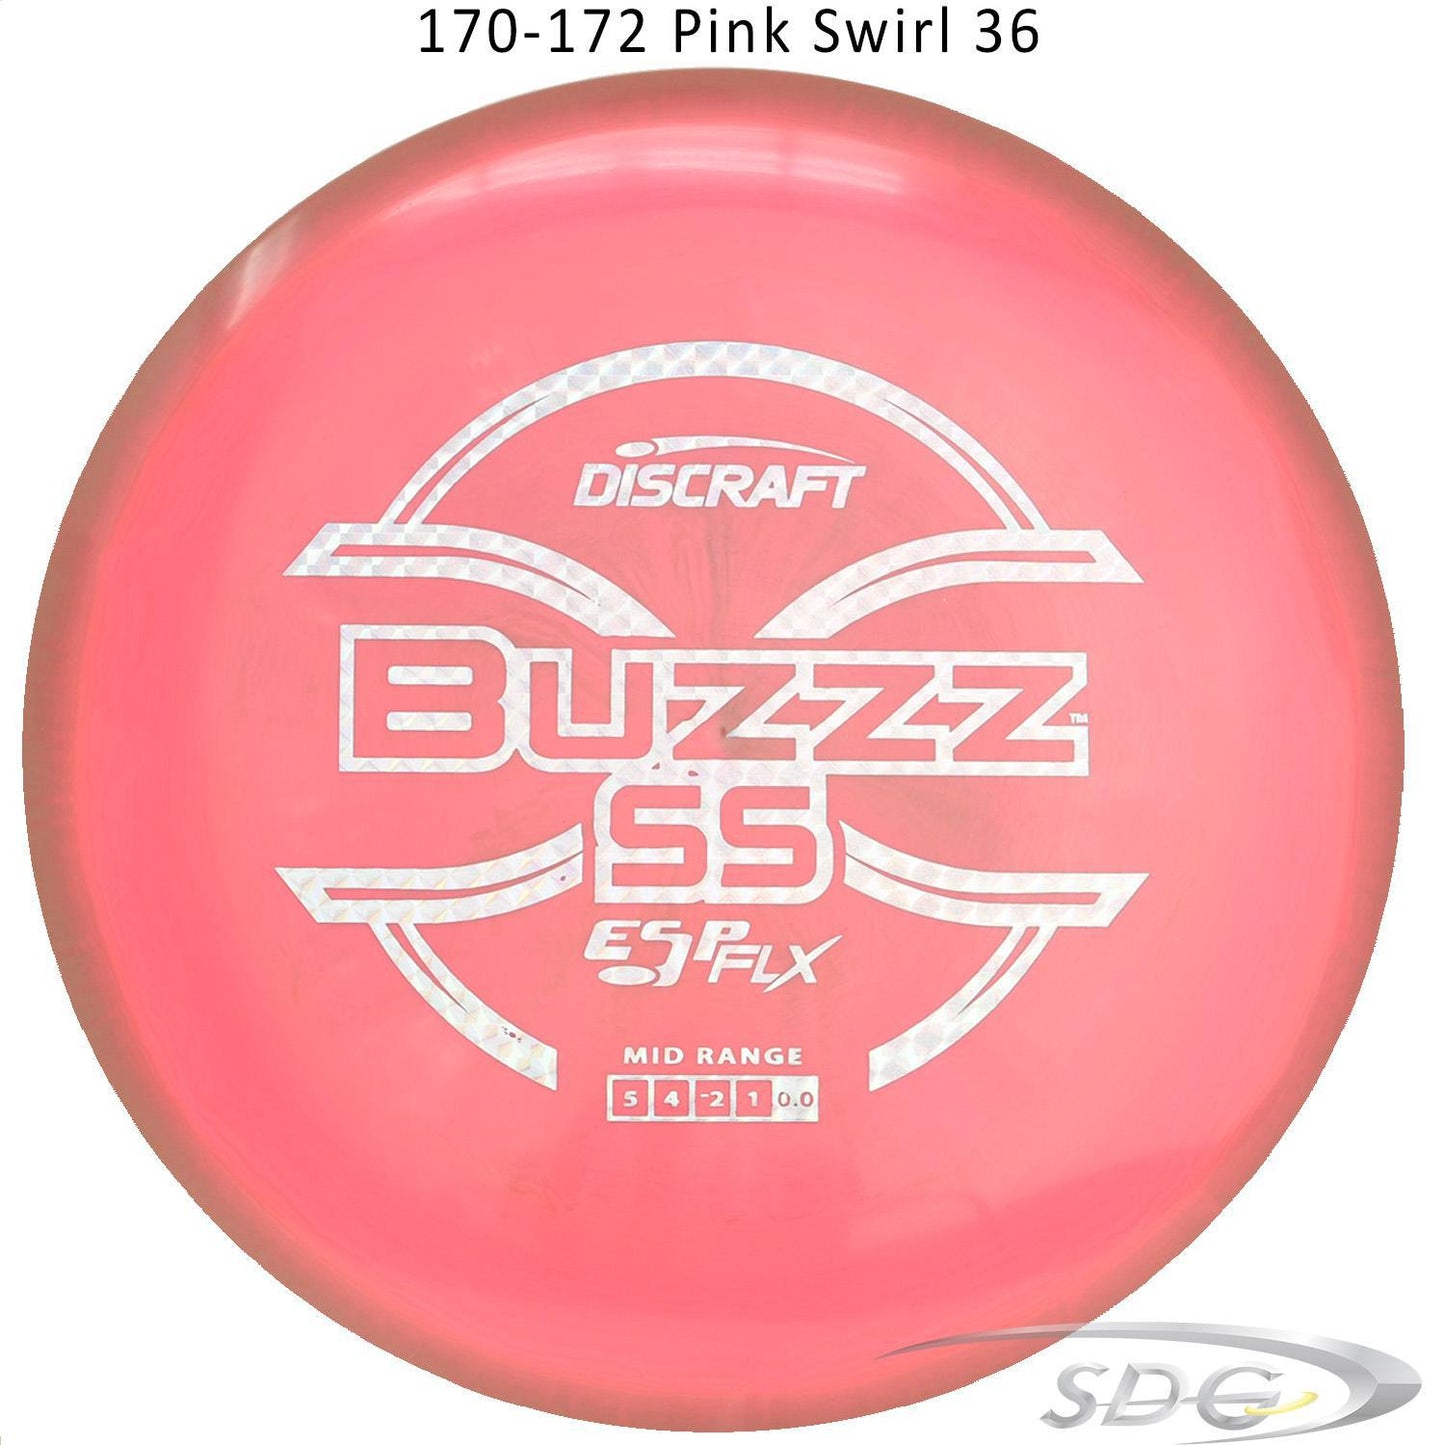 discraft-esp-flx-buzzz-ss-disc-golf-mid-range 170-172 Pink Swirl 36